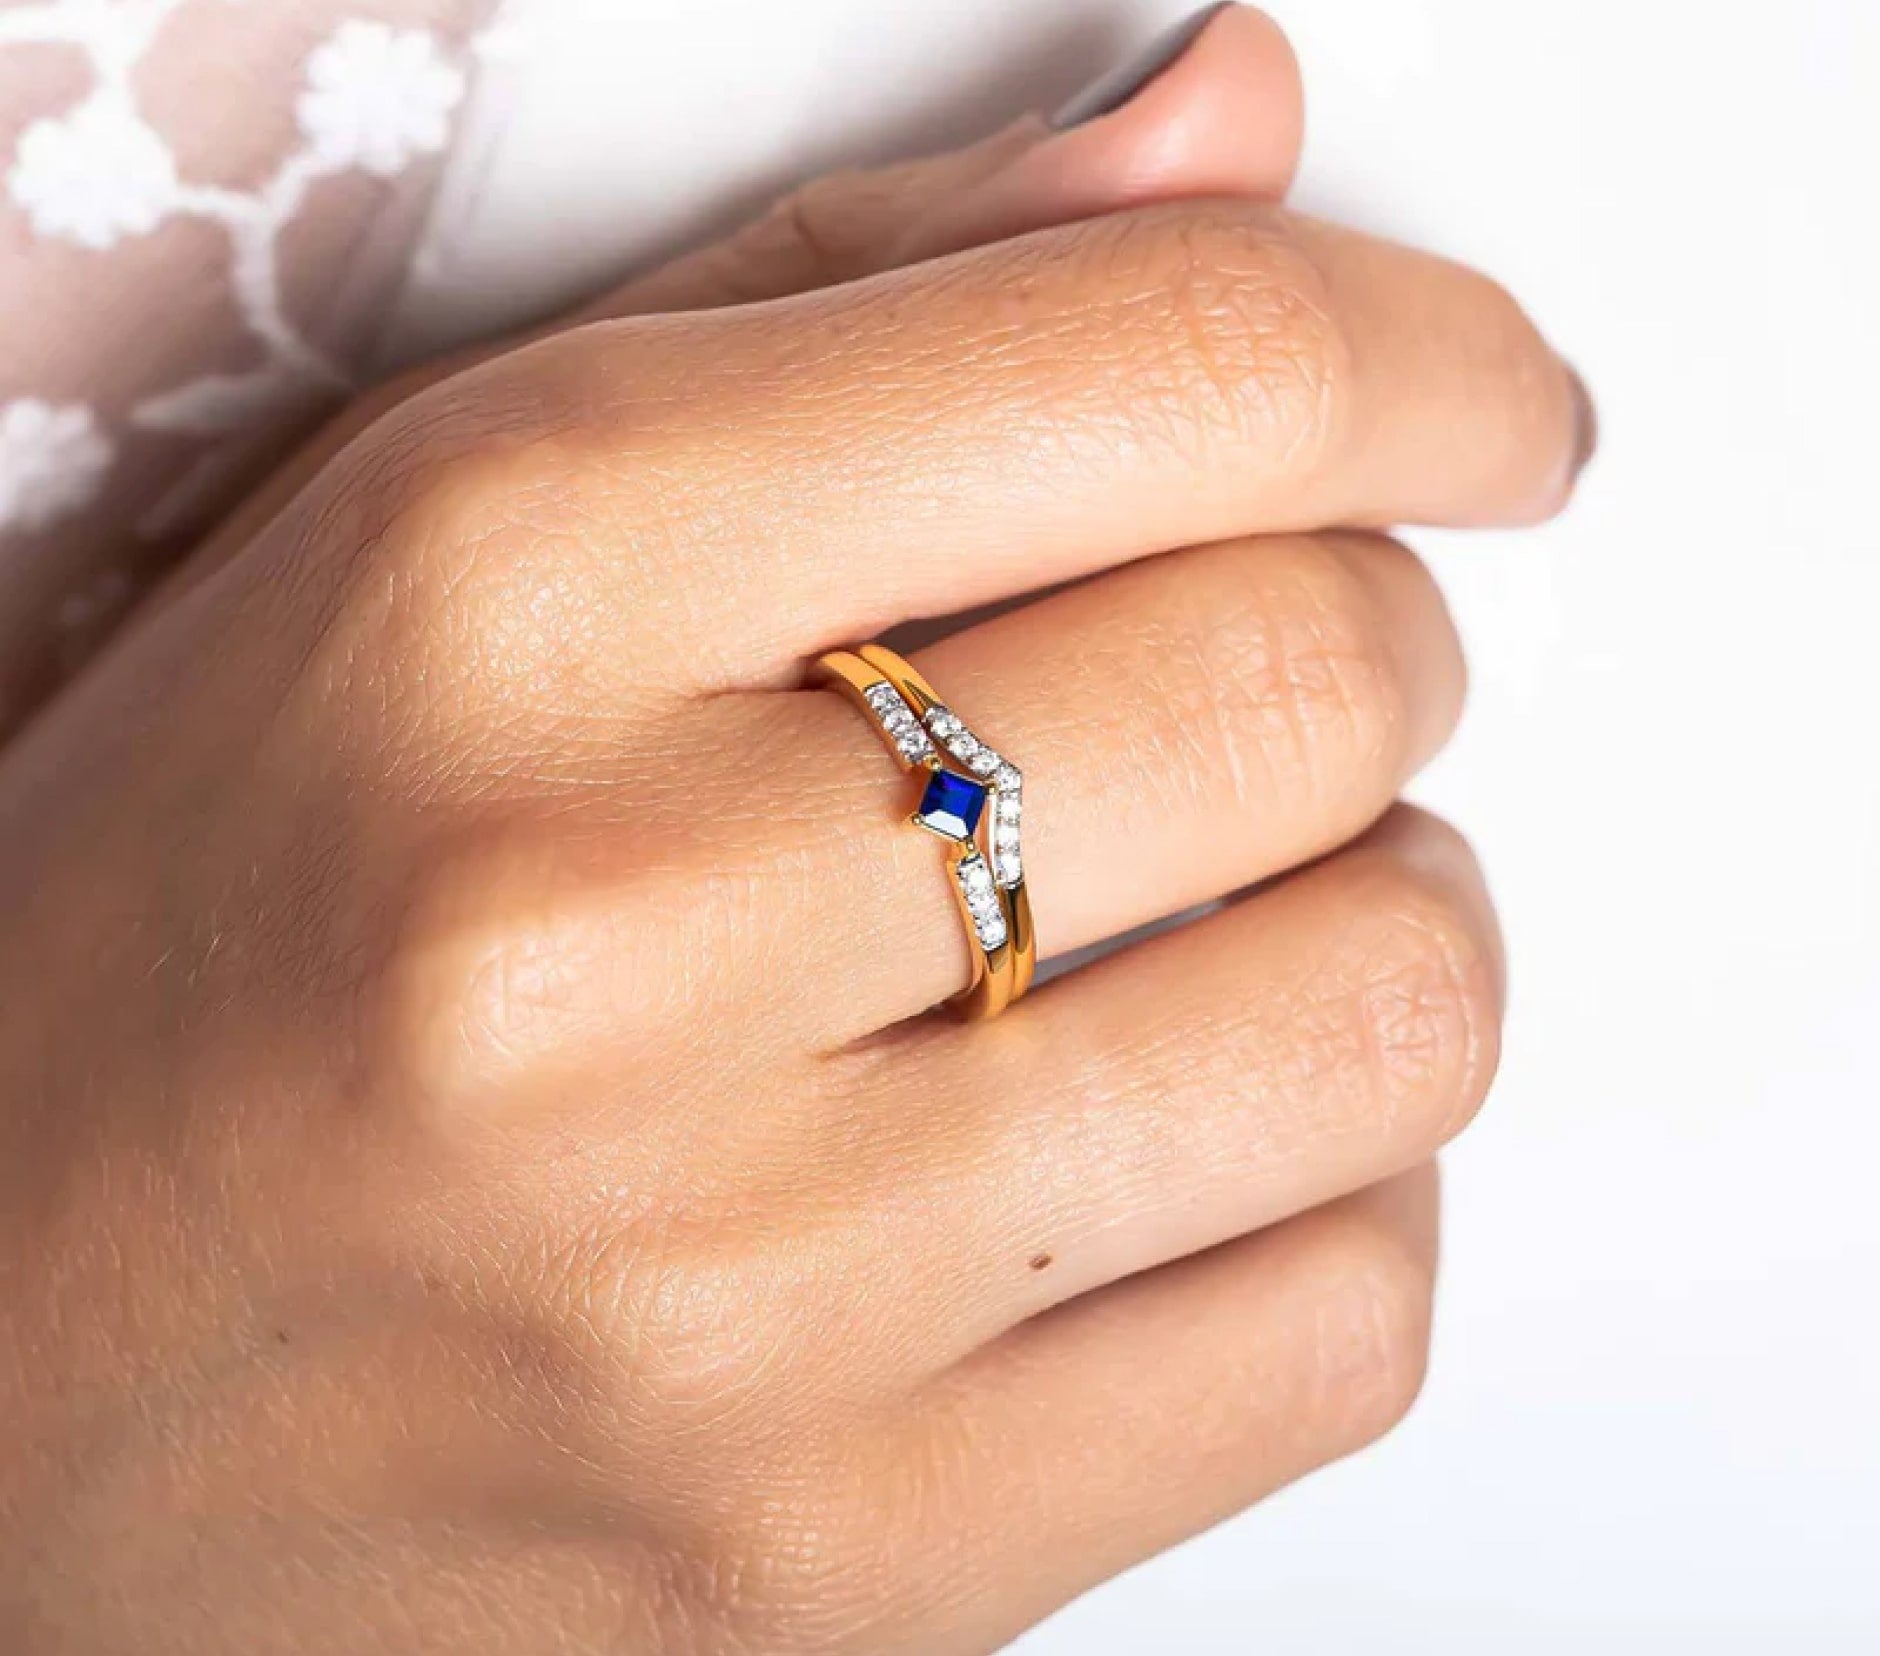 Sapphire diamond engagement ring with matching diamond wedding band